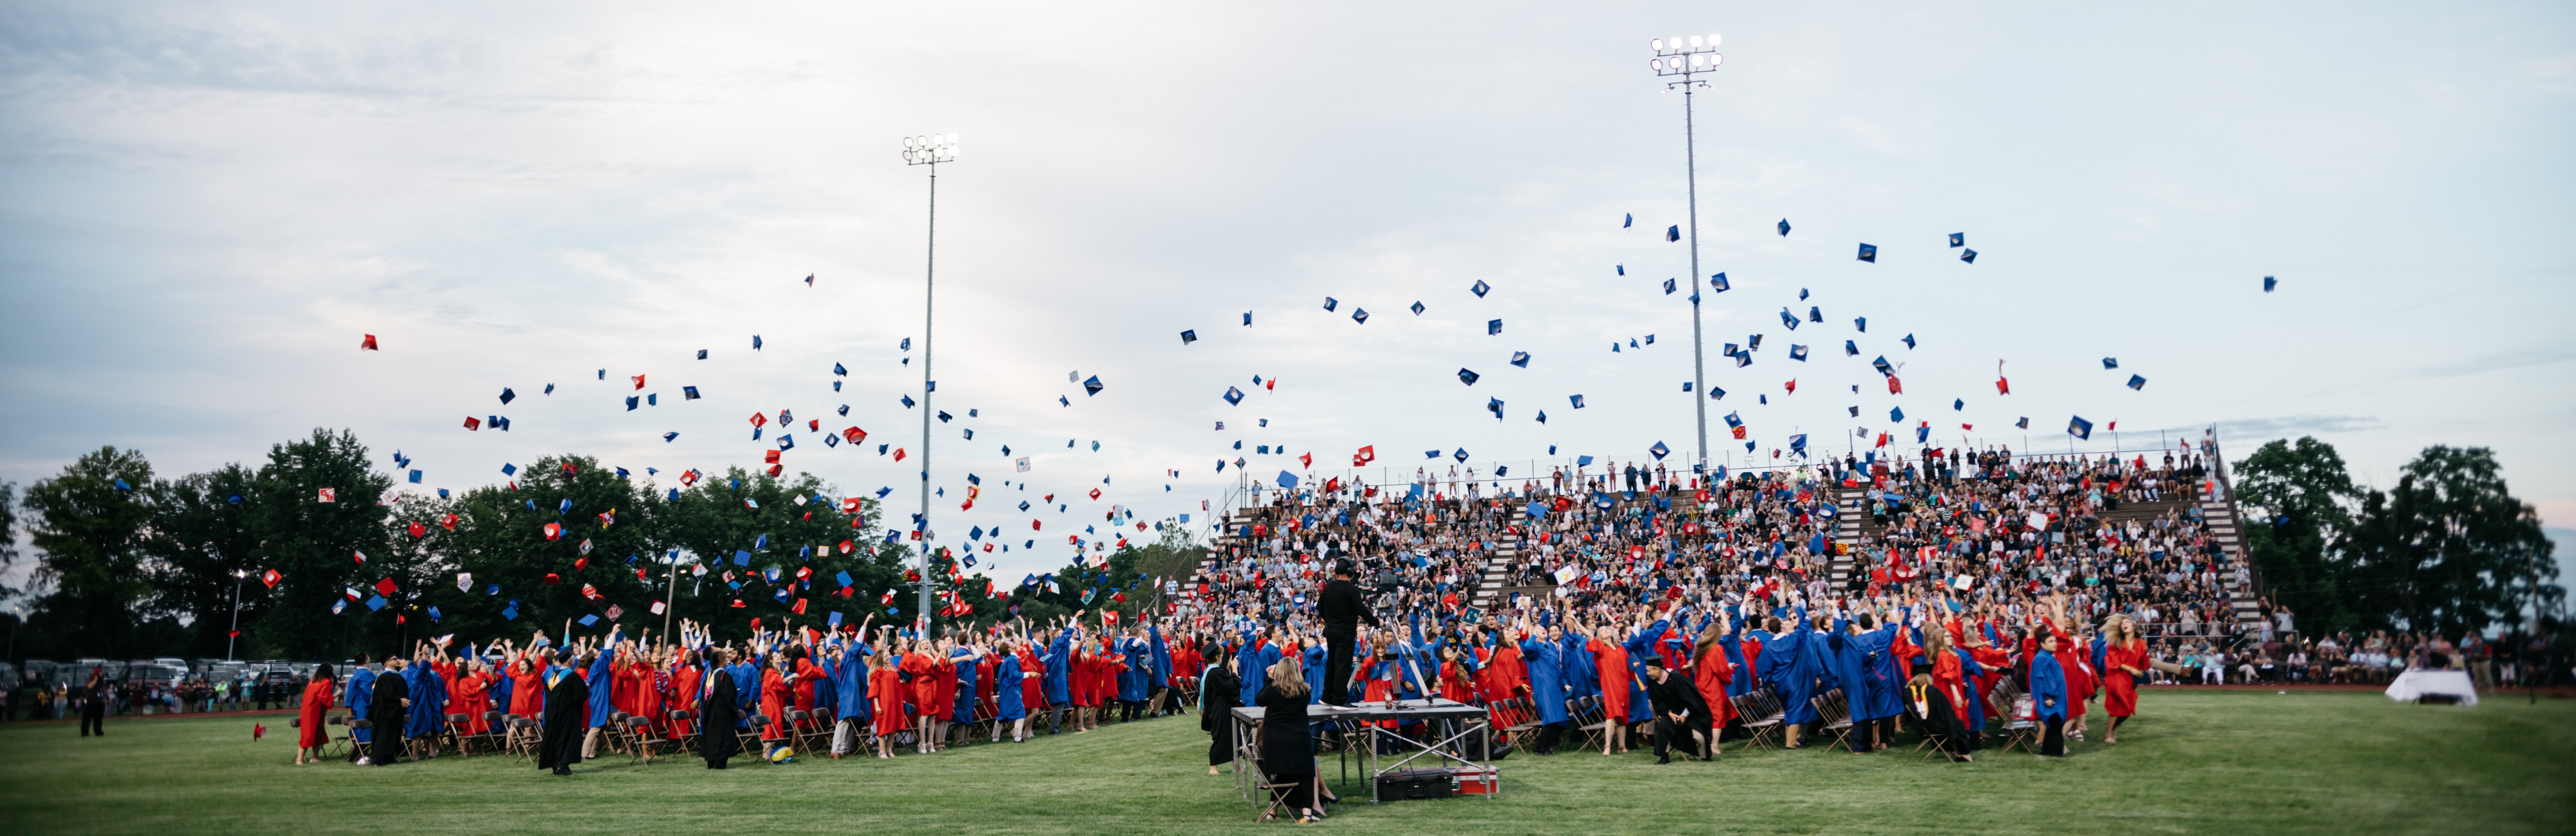 A high school graduation celebration in a football field.